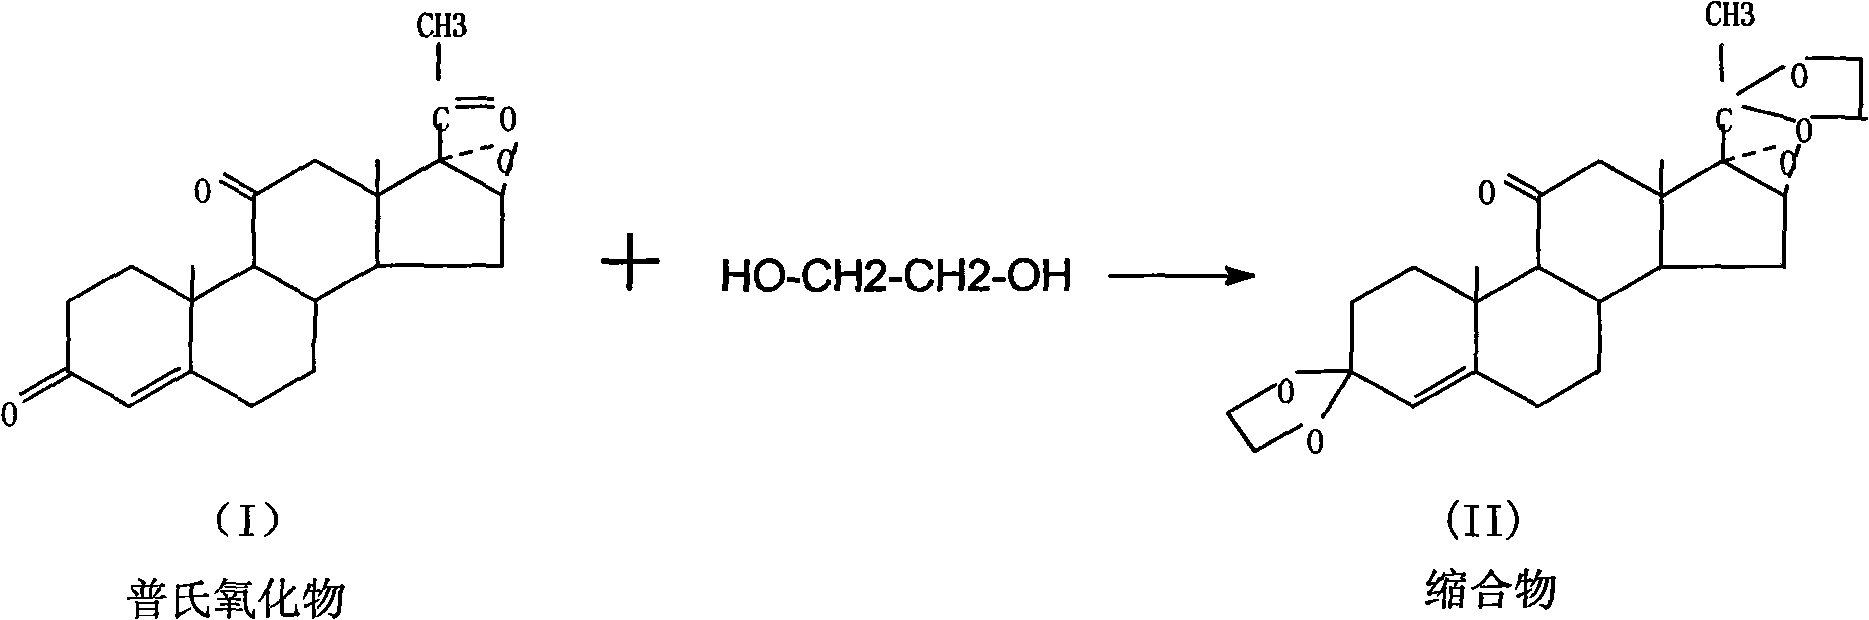 Process method for producing intermediate 3,20-diethylene glycol of betamethasone serial products